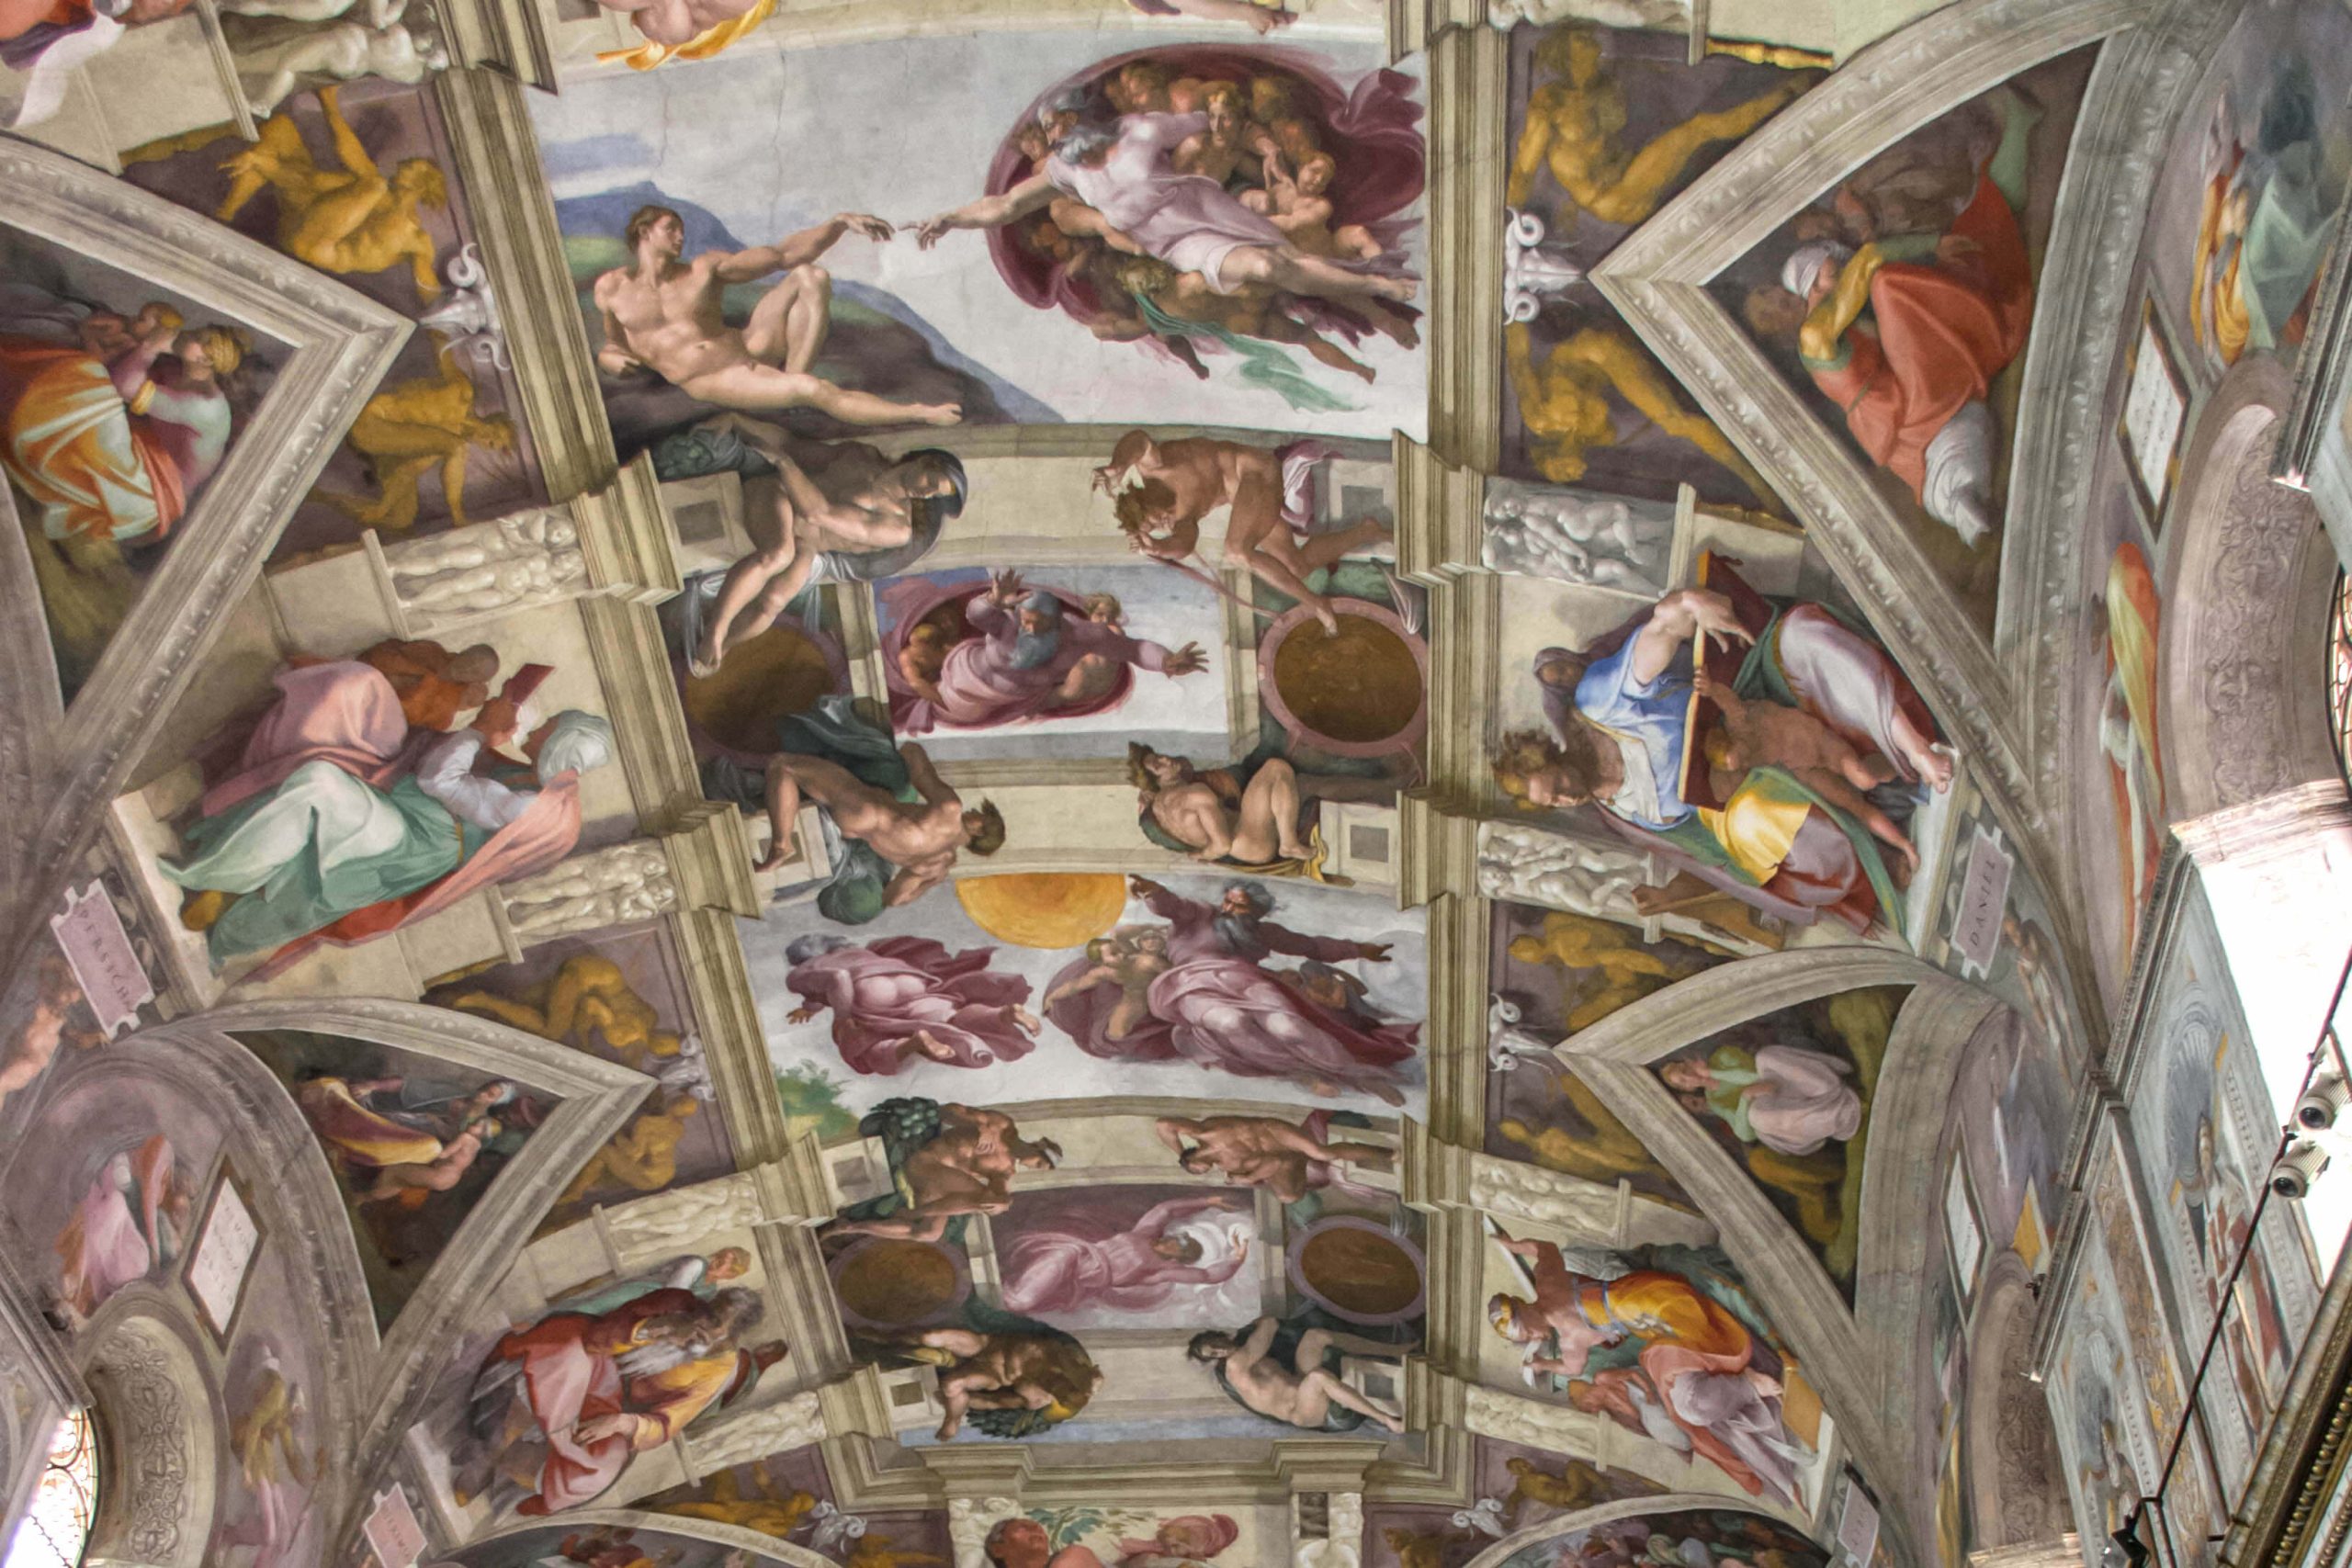 Sistine Chapel ceiling, Michelangelo